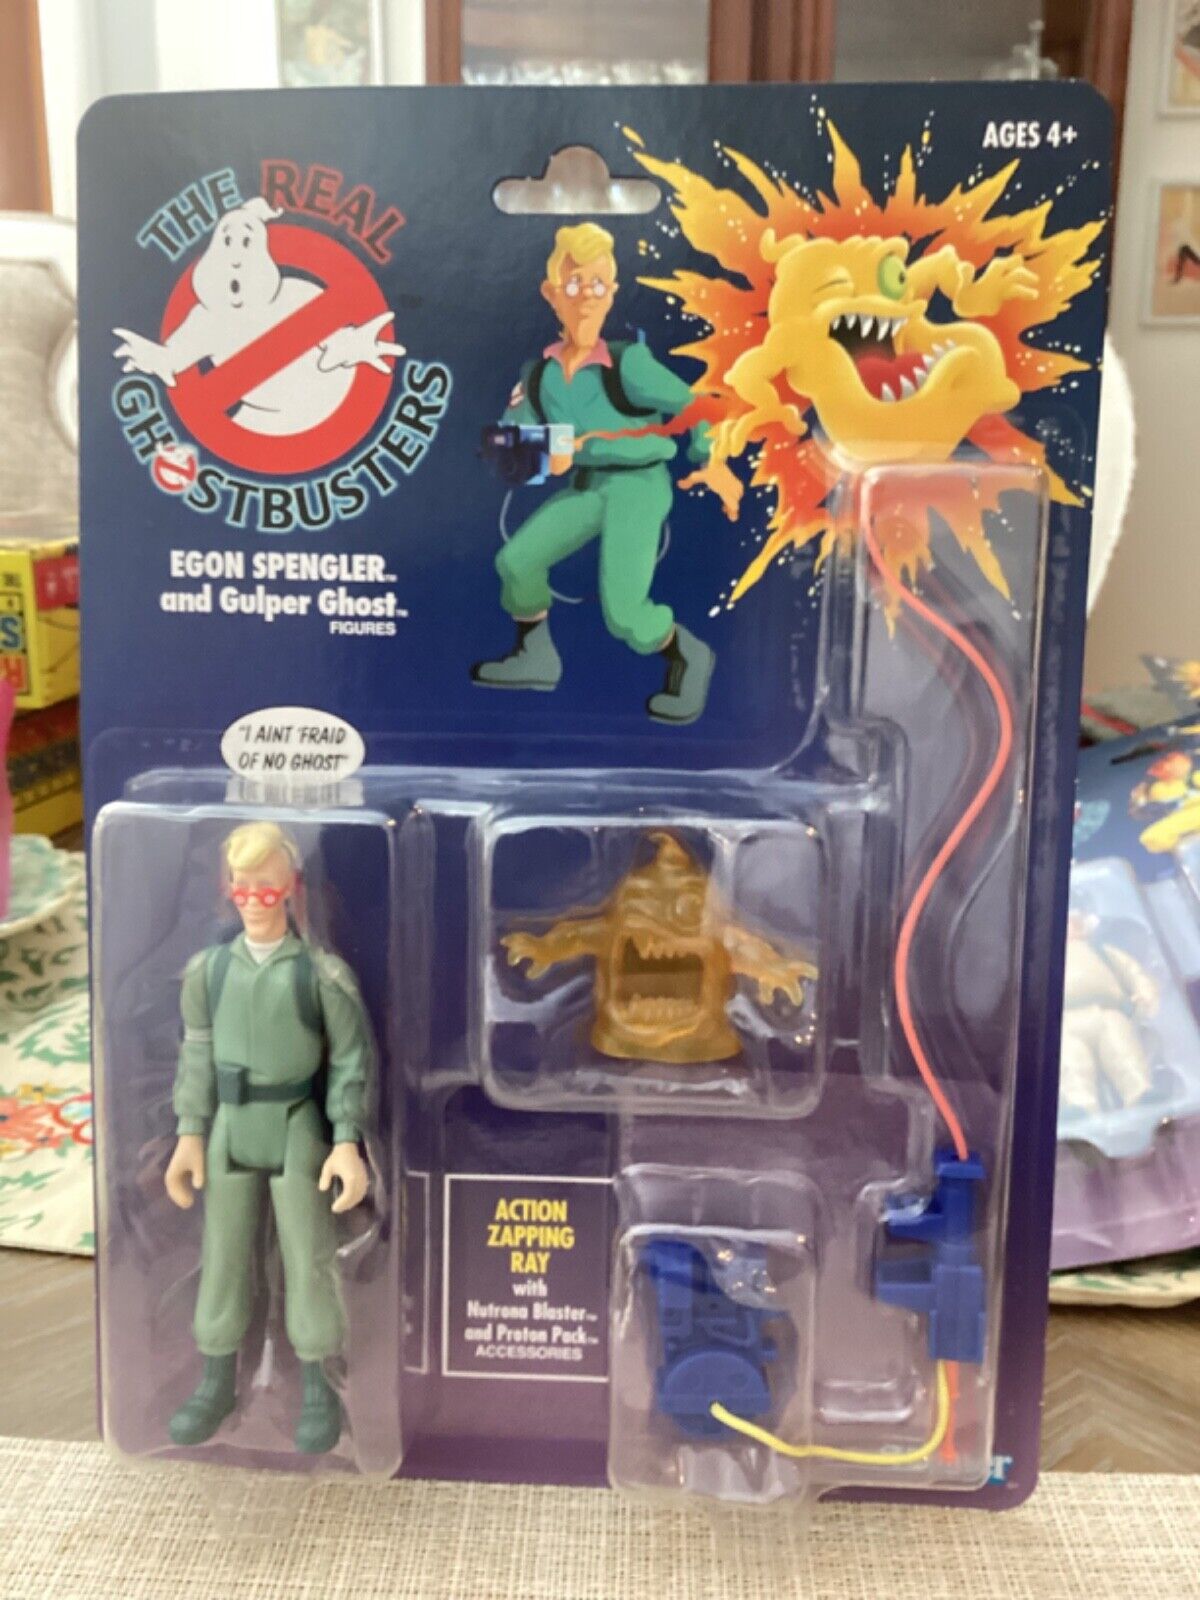 The Real Ghostbuster by Kenner Egon Spengler & Gulper Ghost mint in package